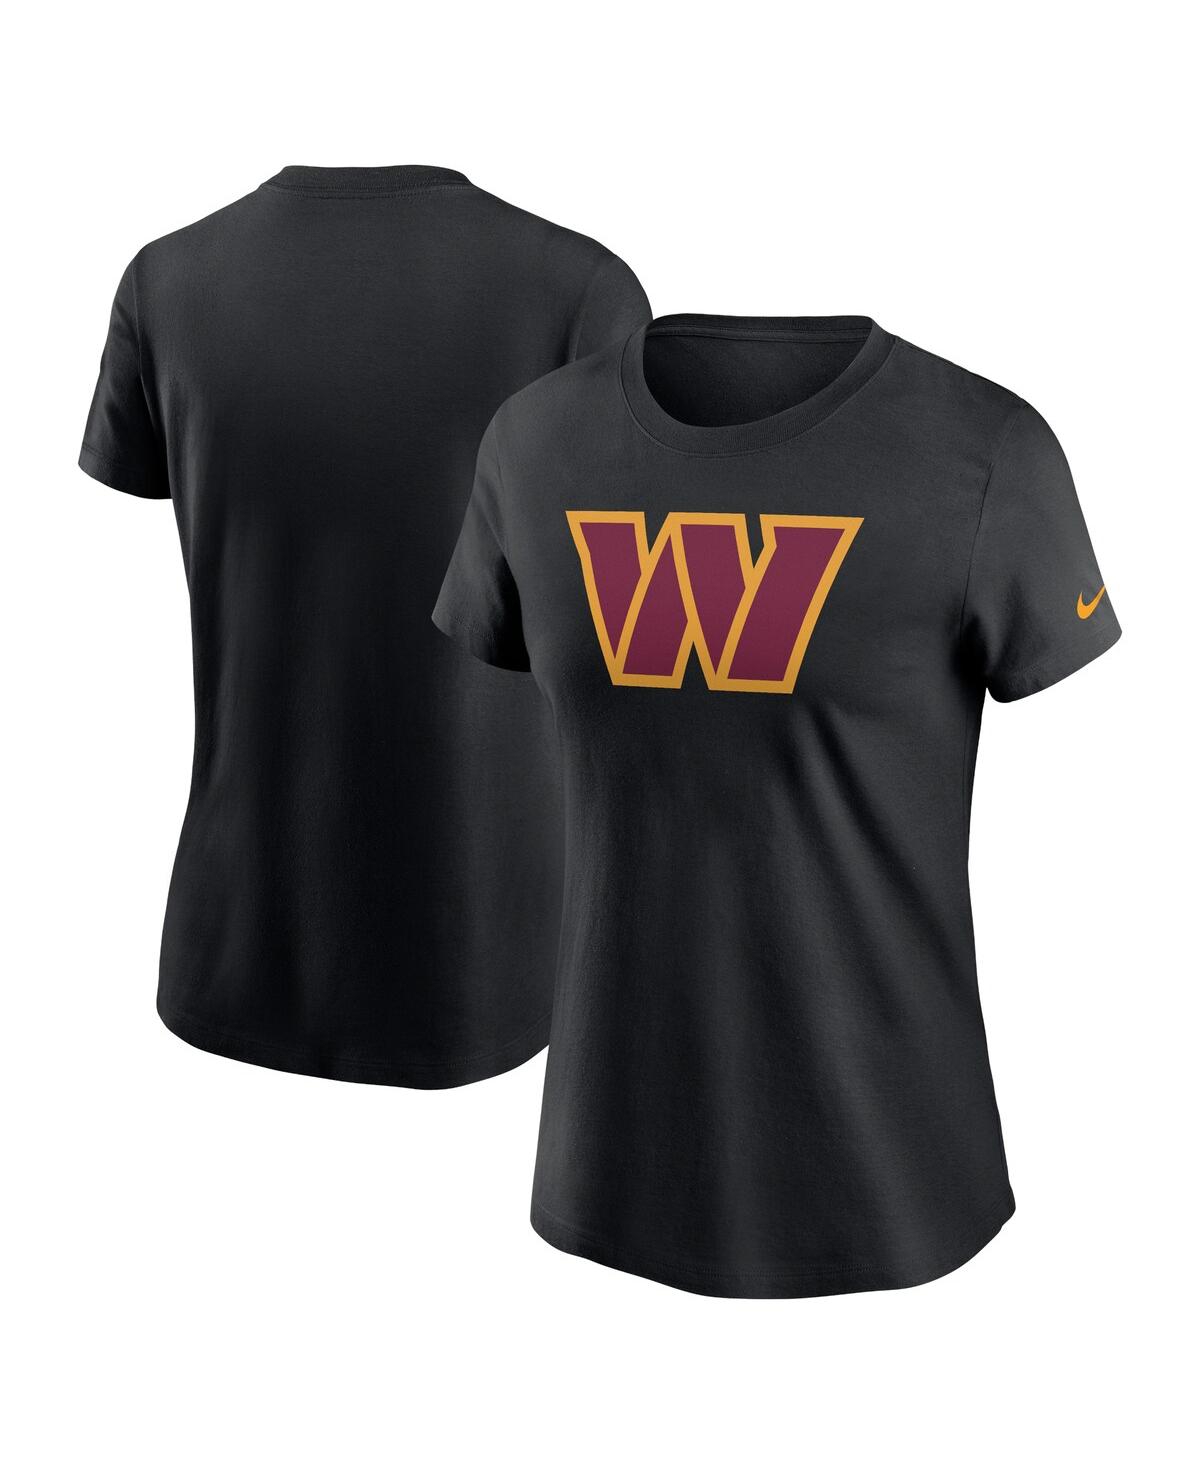 Women's Nike Black Washington Commanders Logo Cotton Essential T-shirt - Black